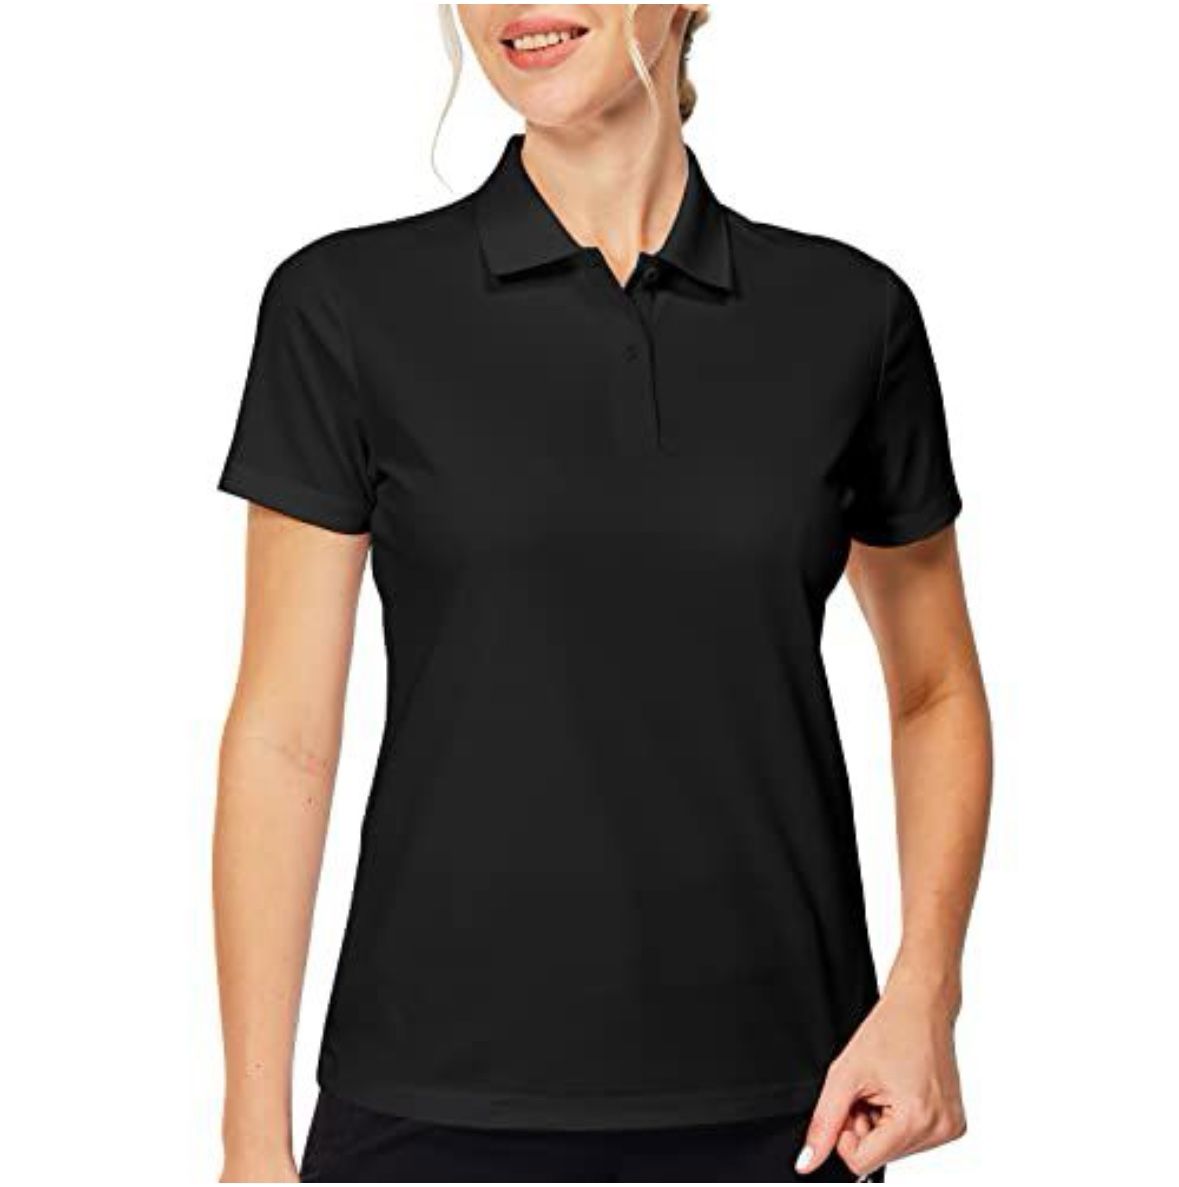 Casei Womens Golf Polo Shirts Short Sleeve Shirts Quick Dry Collared Shirt